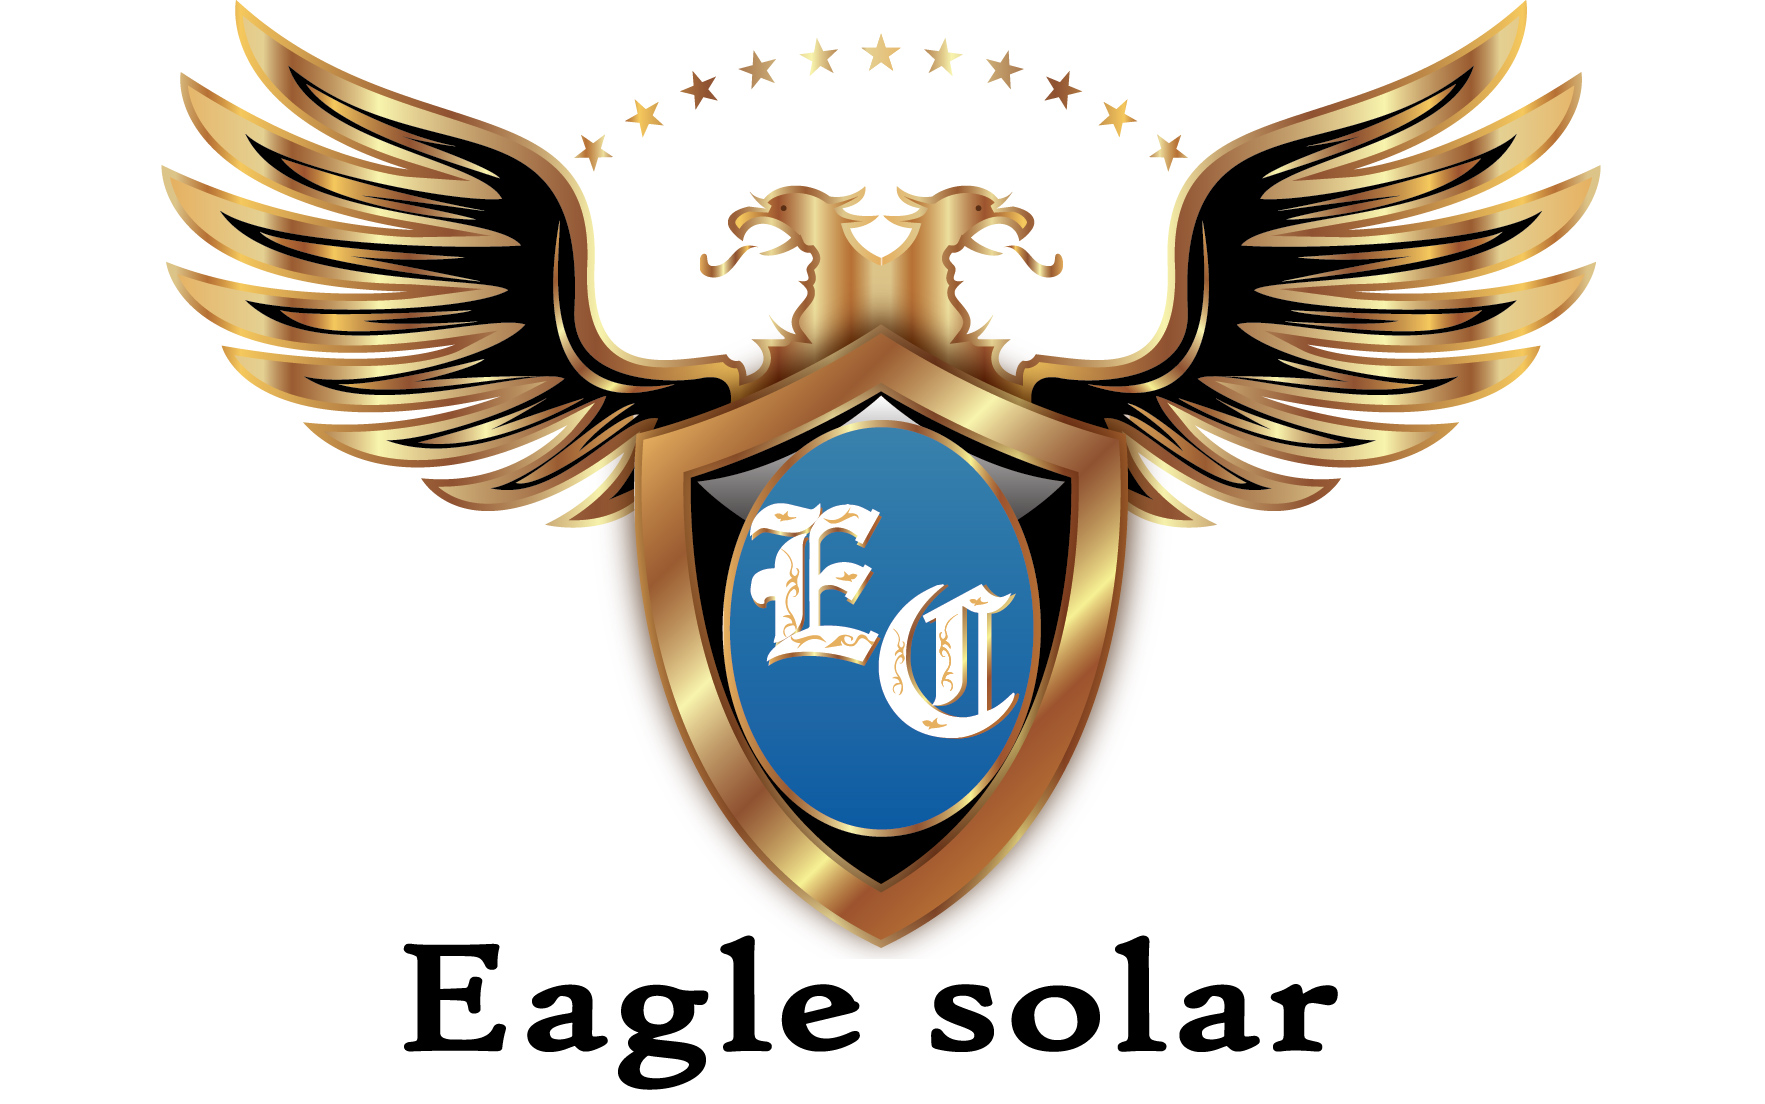 Eagle solar : Brand Short Description Type Here.